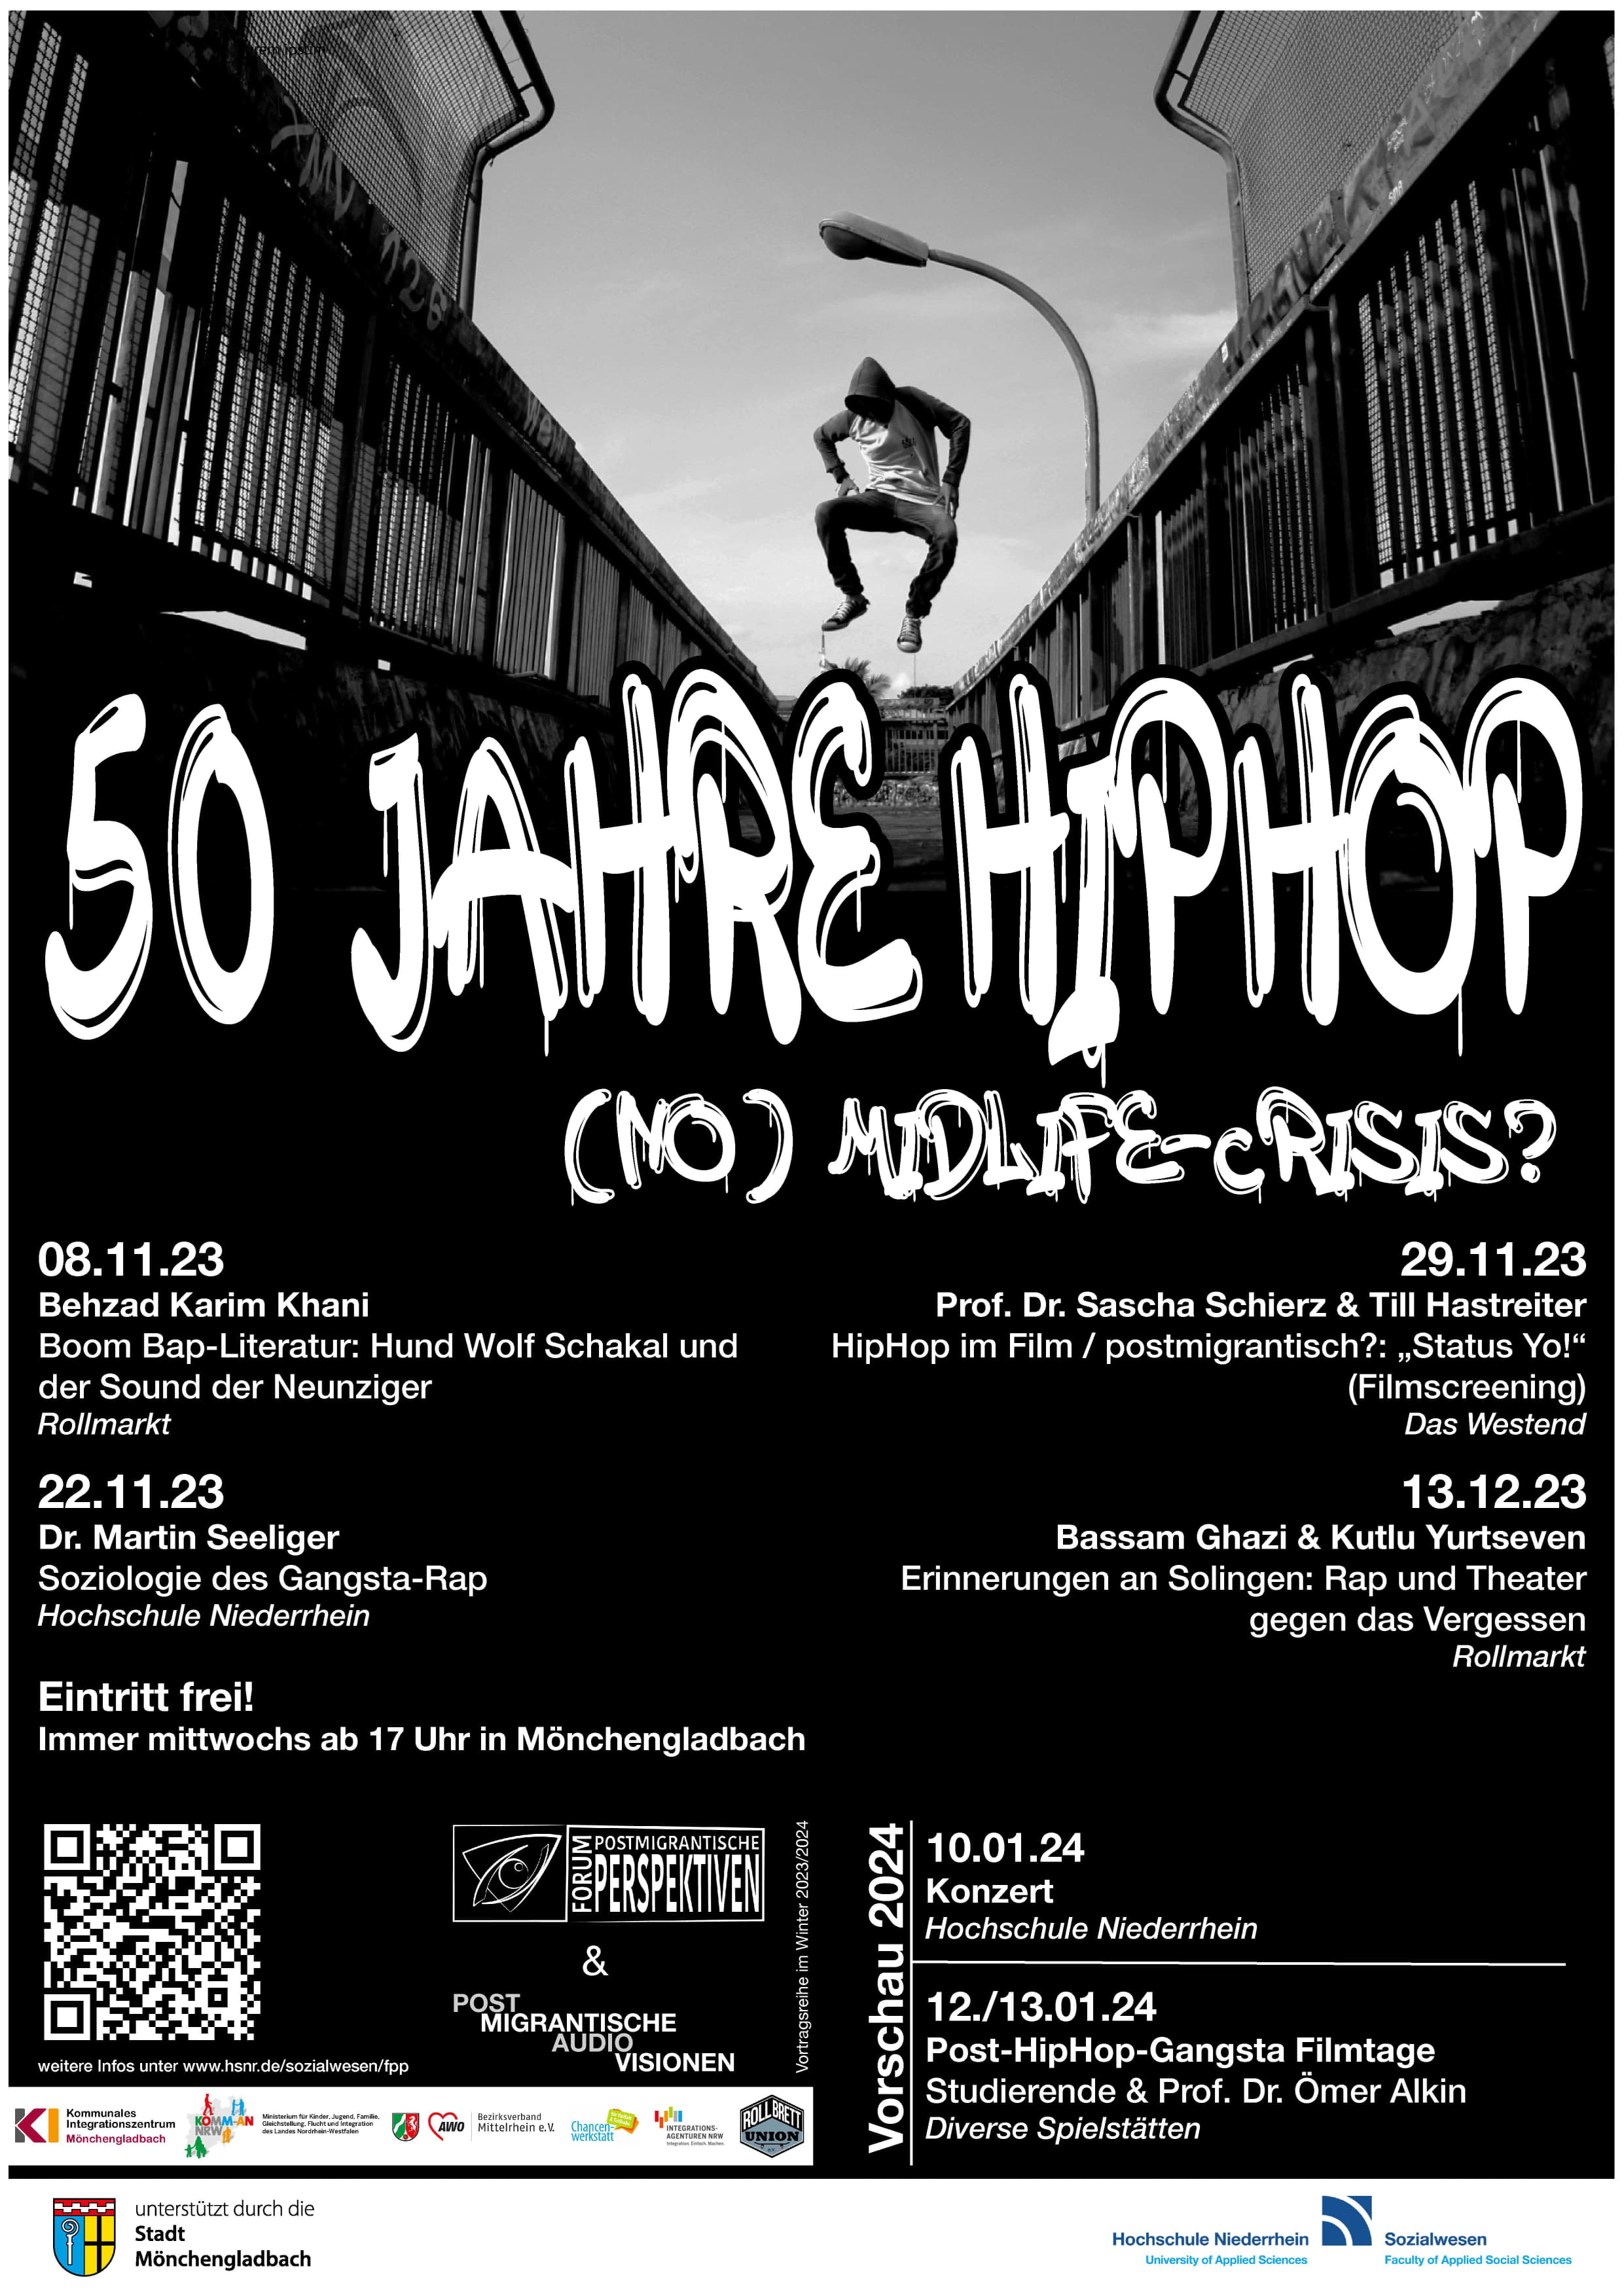 Forum Postmigrantische Perspektiven - Plakat Veranstaltungsreihe HipHop wird 50